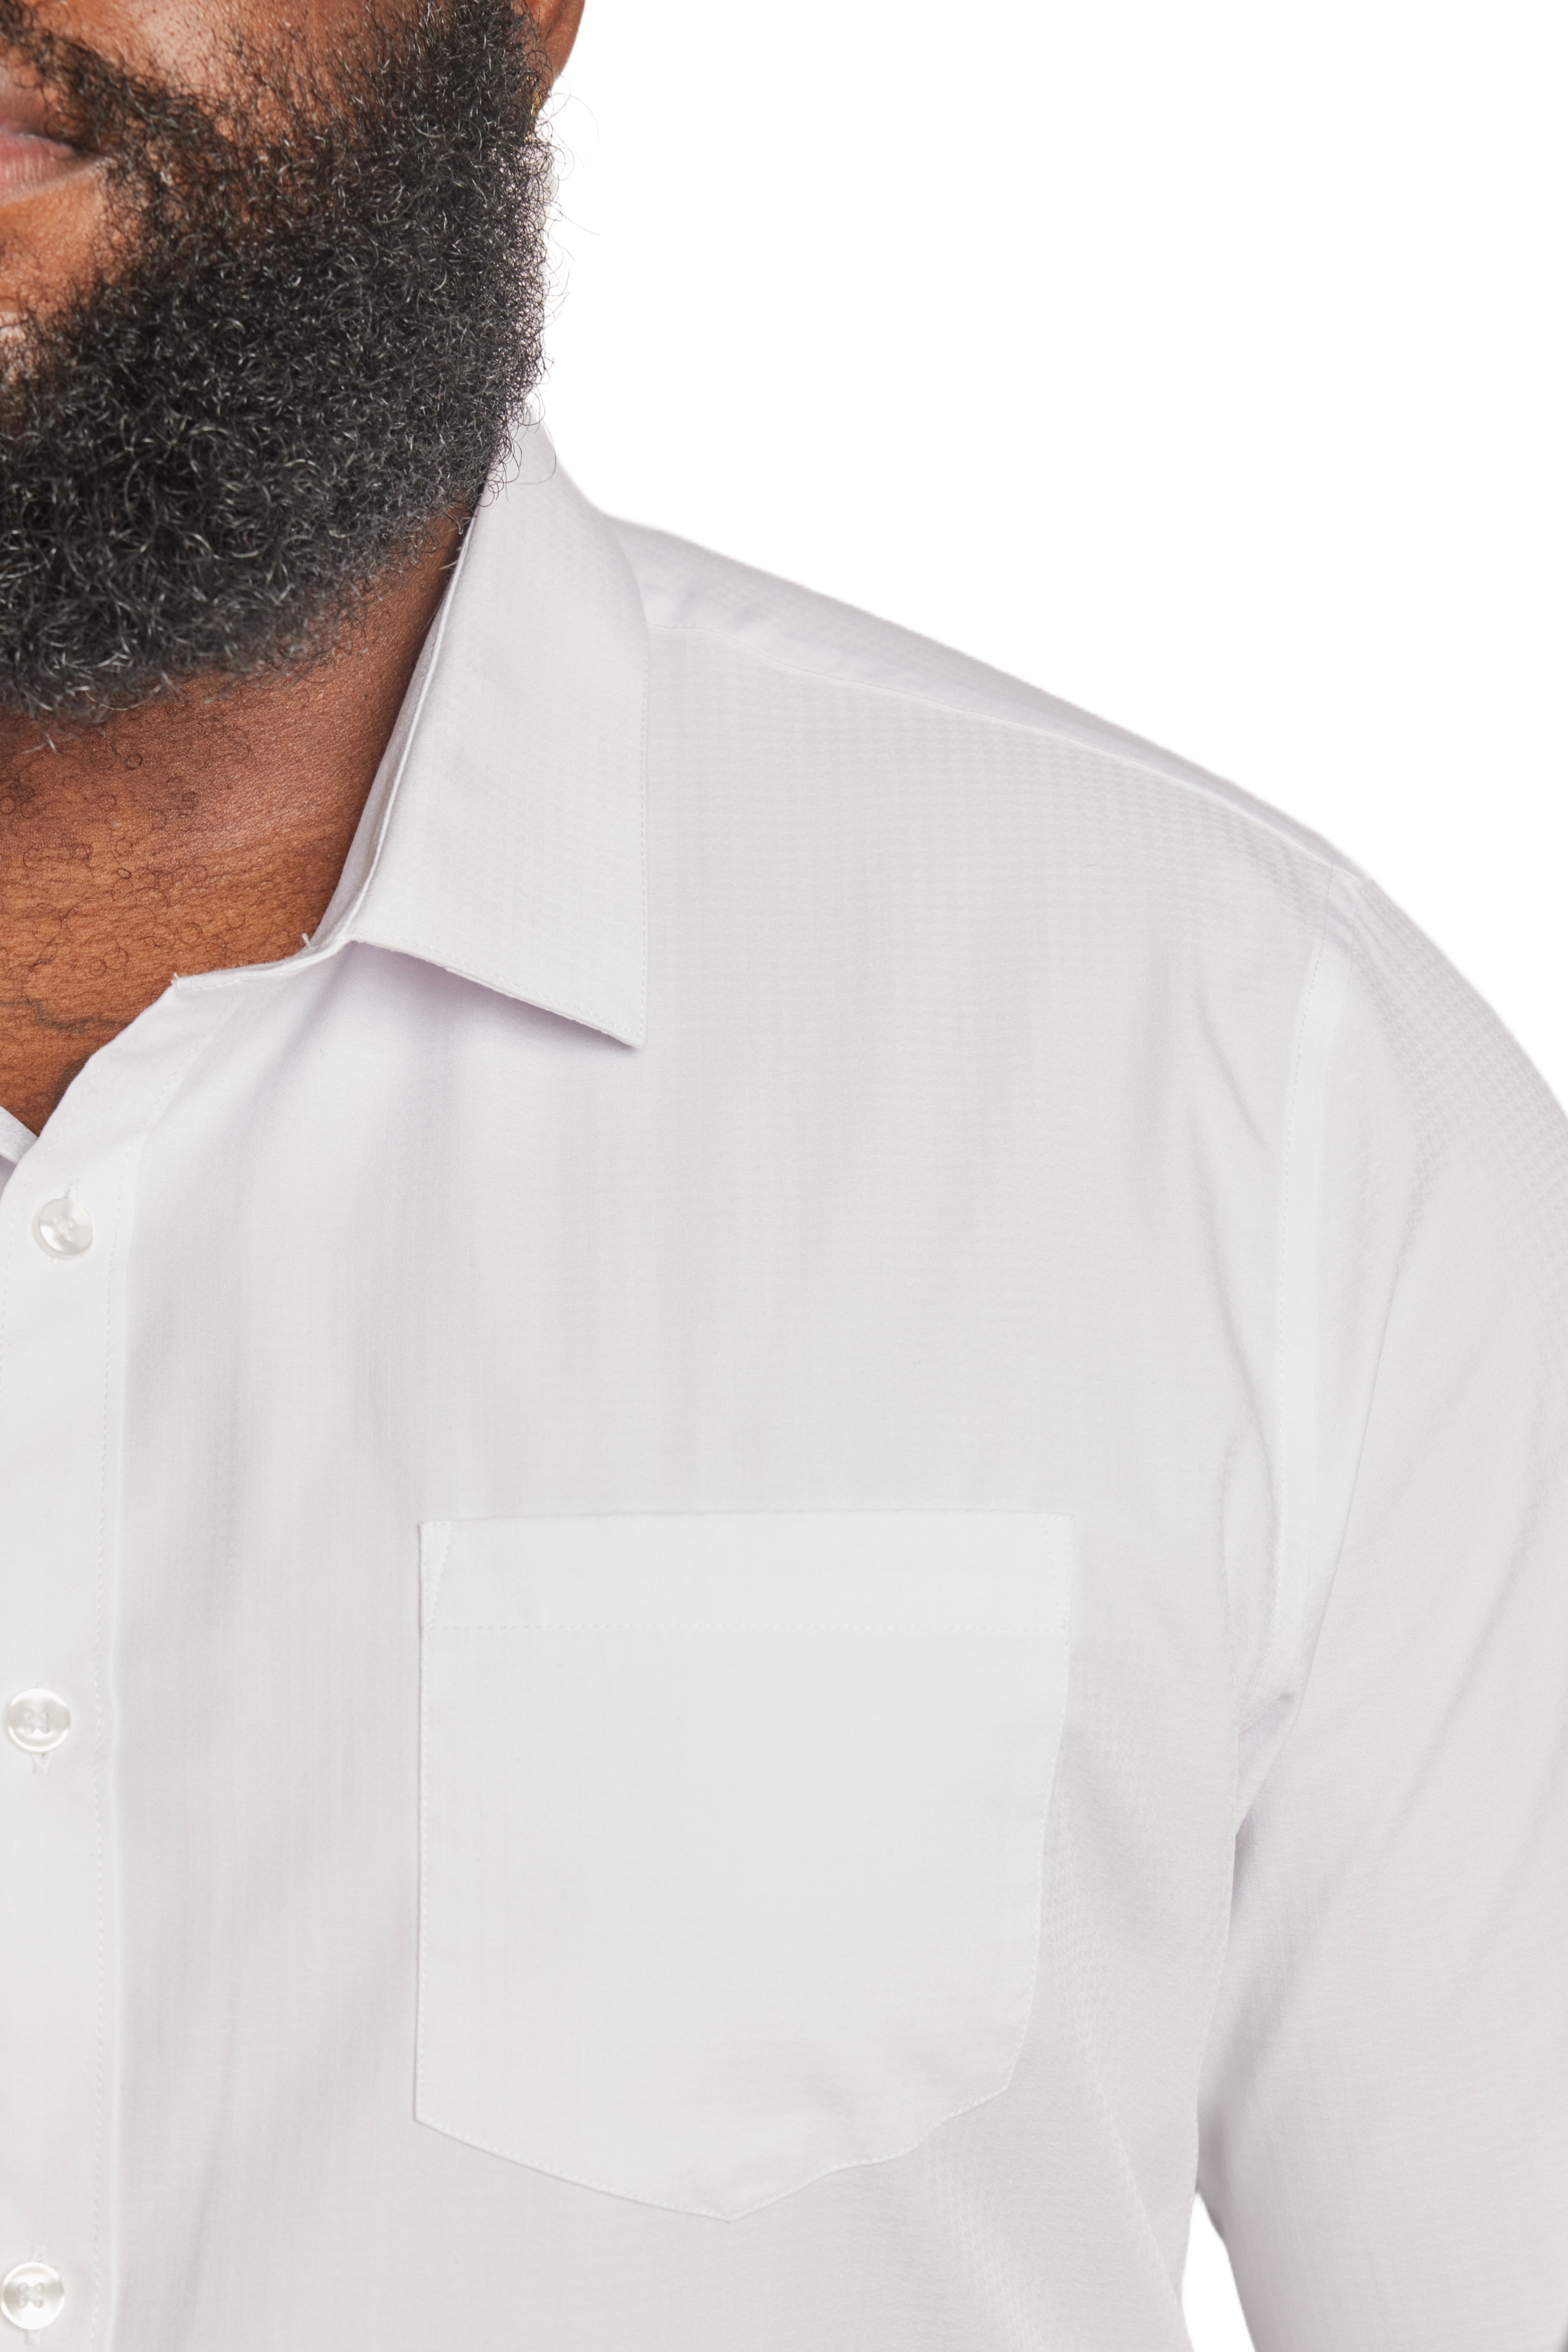 Big & Tall Samuel Spread Collar Shirt - White Houndstooth Jacquard